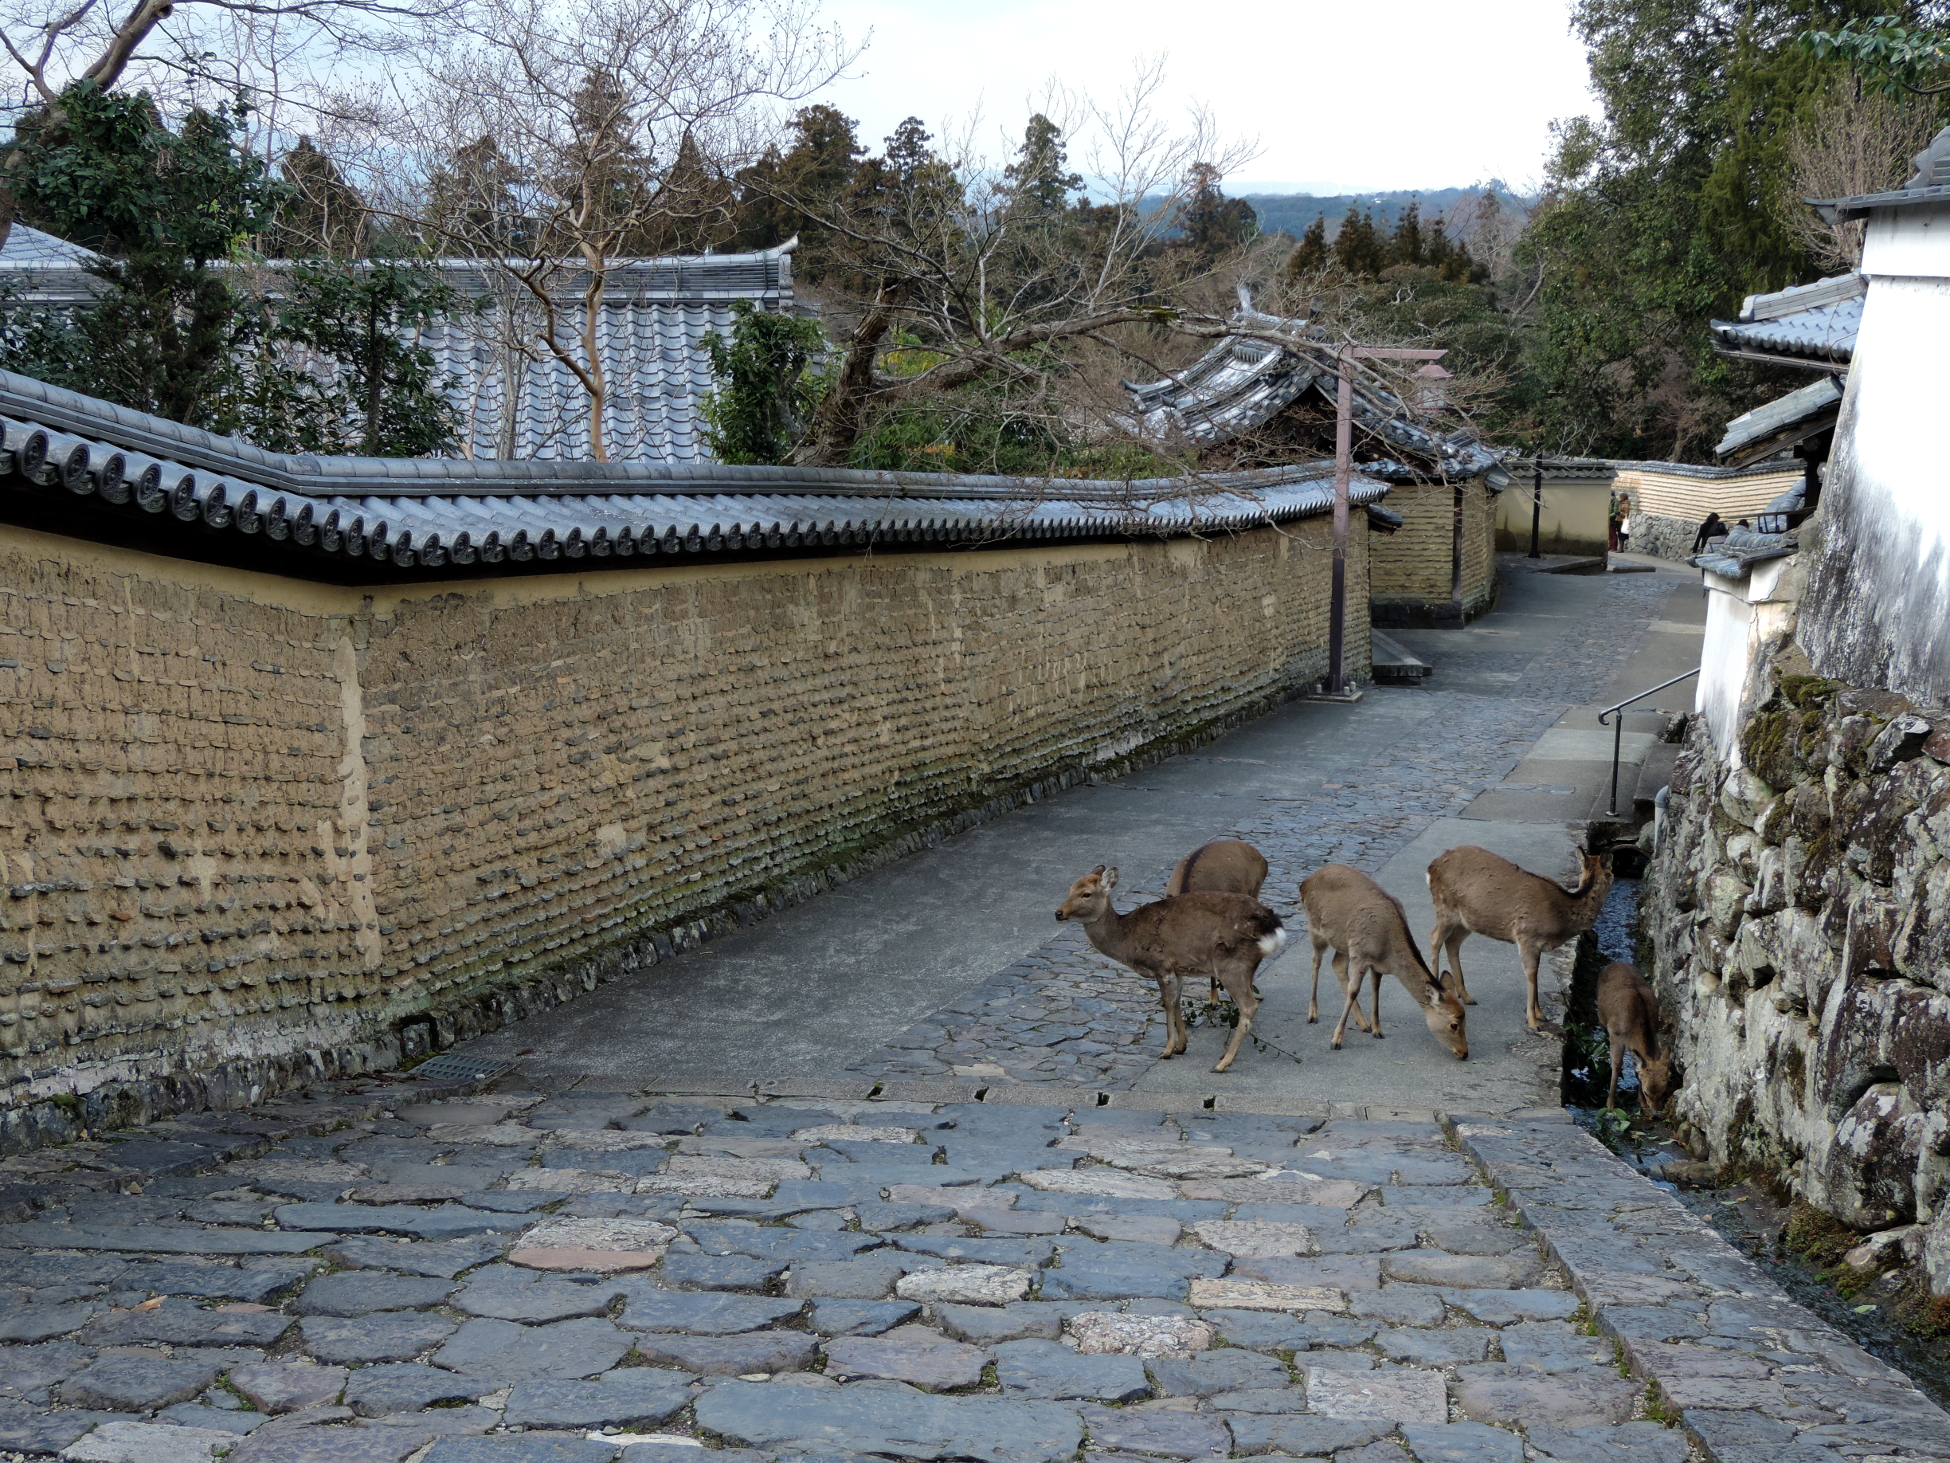 Nara – home of deer and Buddha